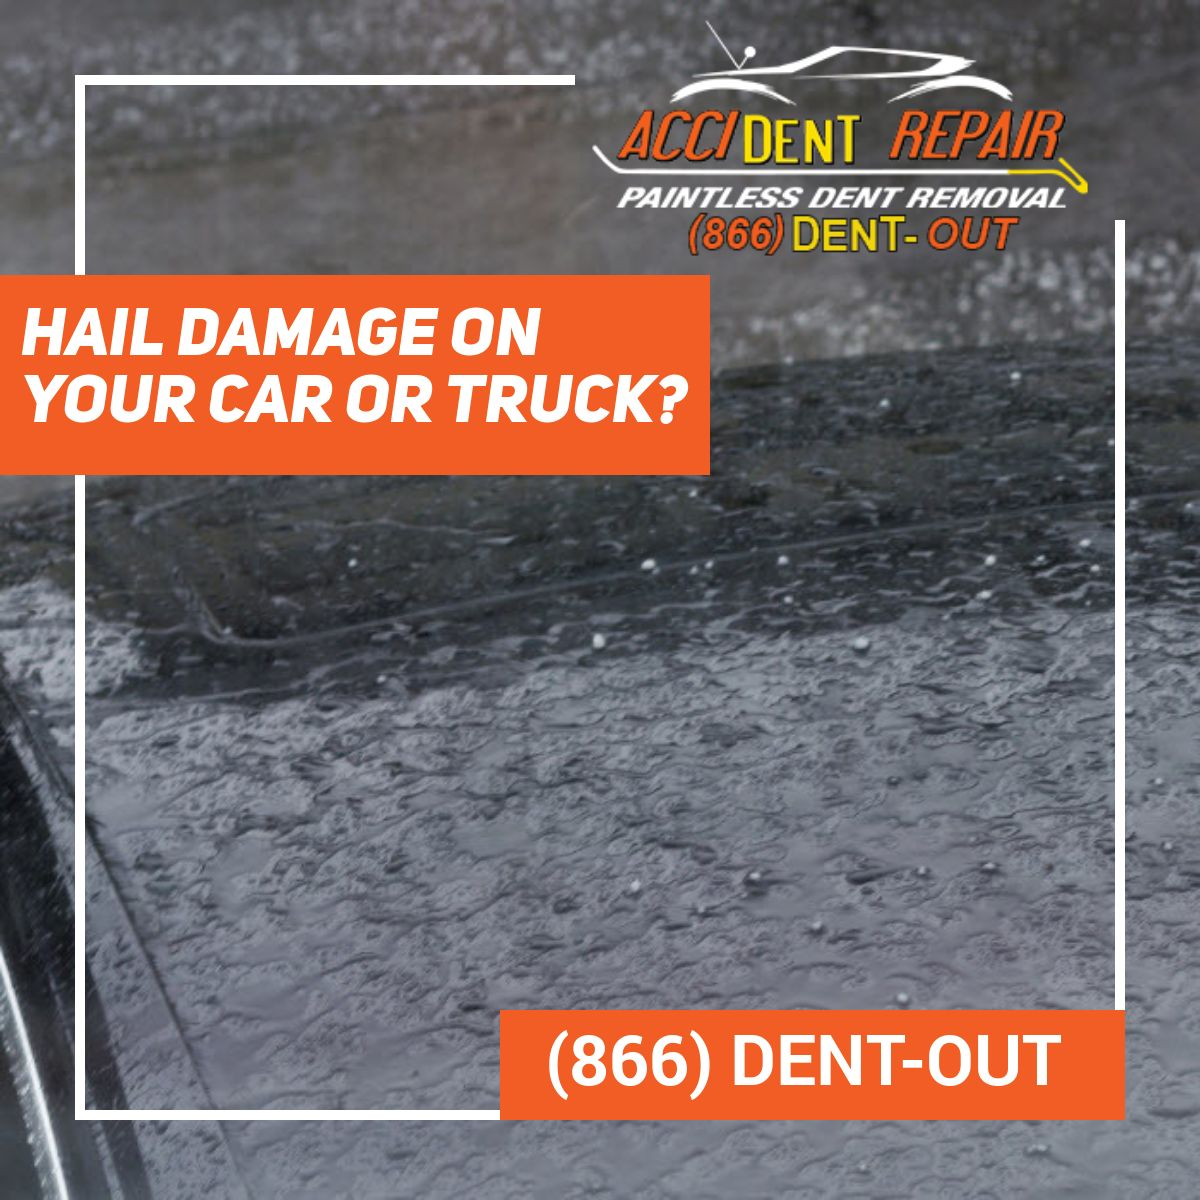 hail damage repair cars and trucks